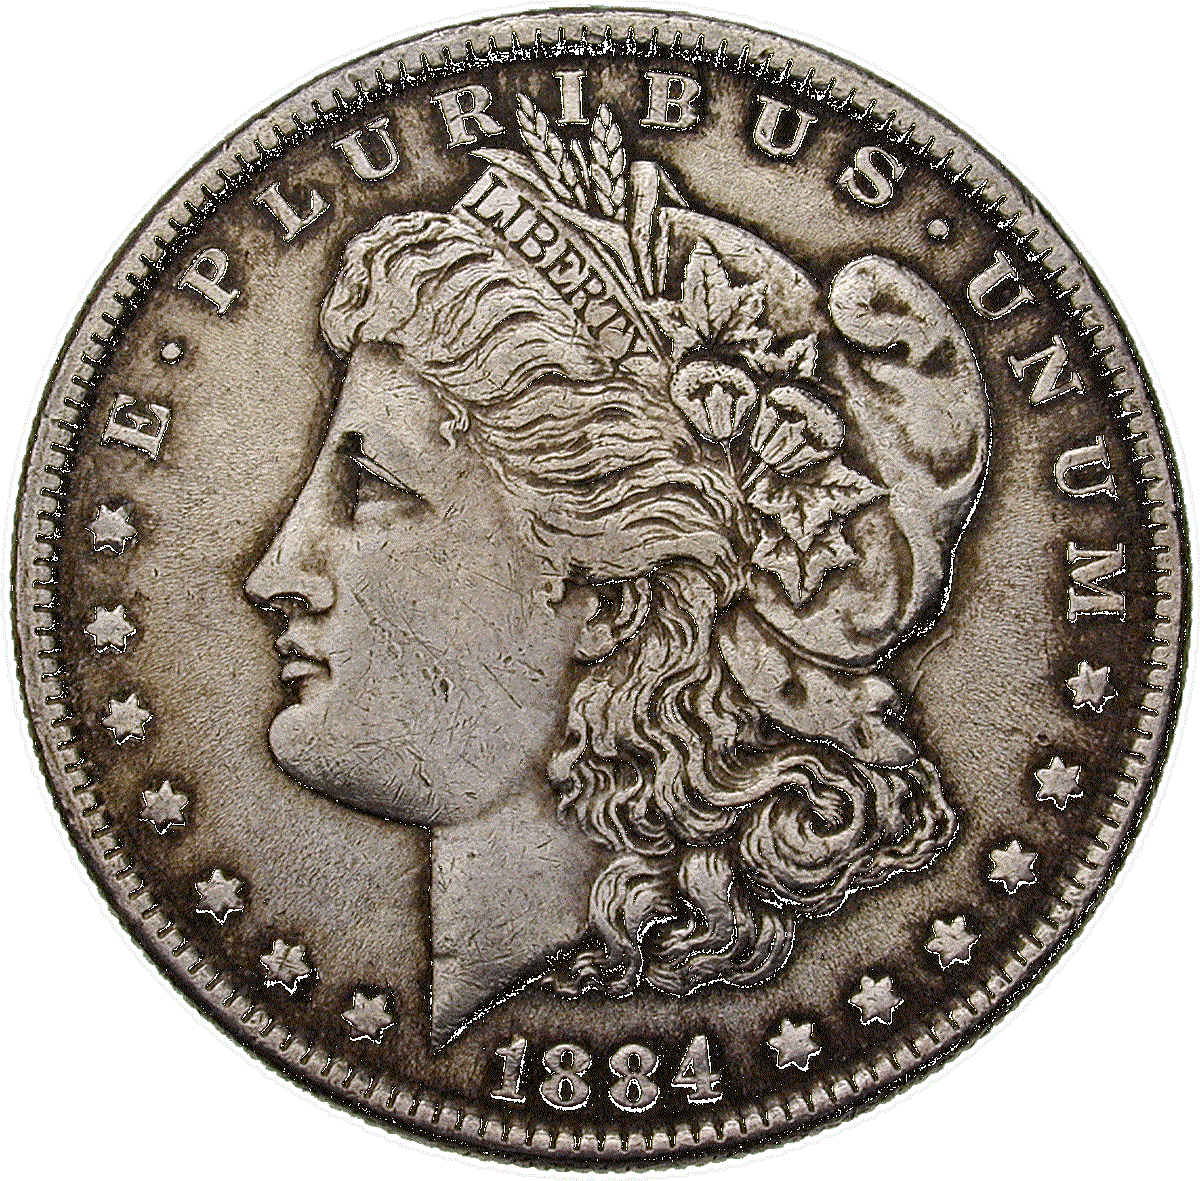 america dollar 1884 obverse